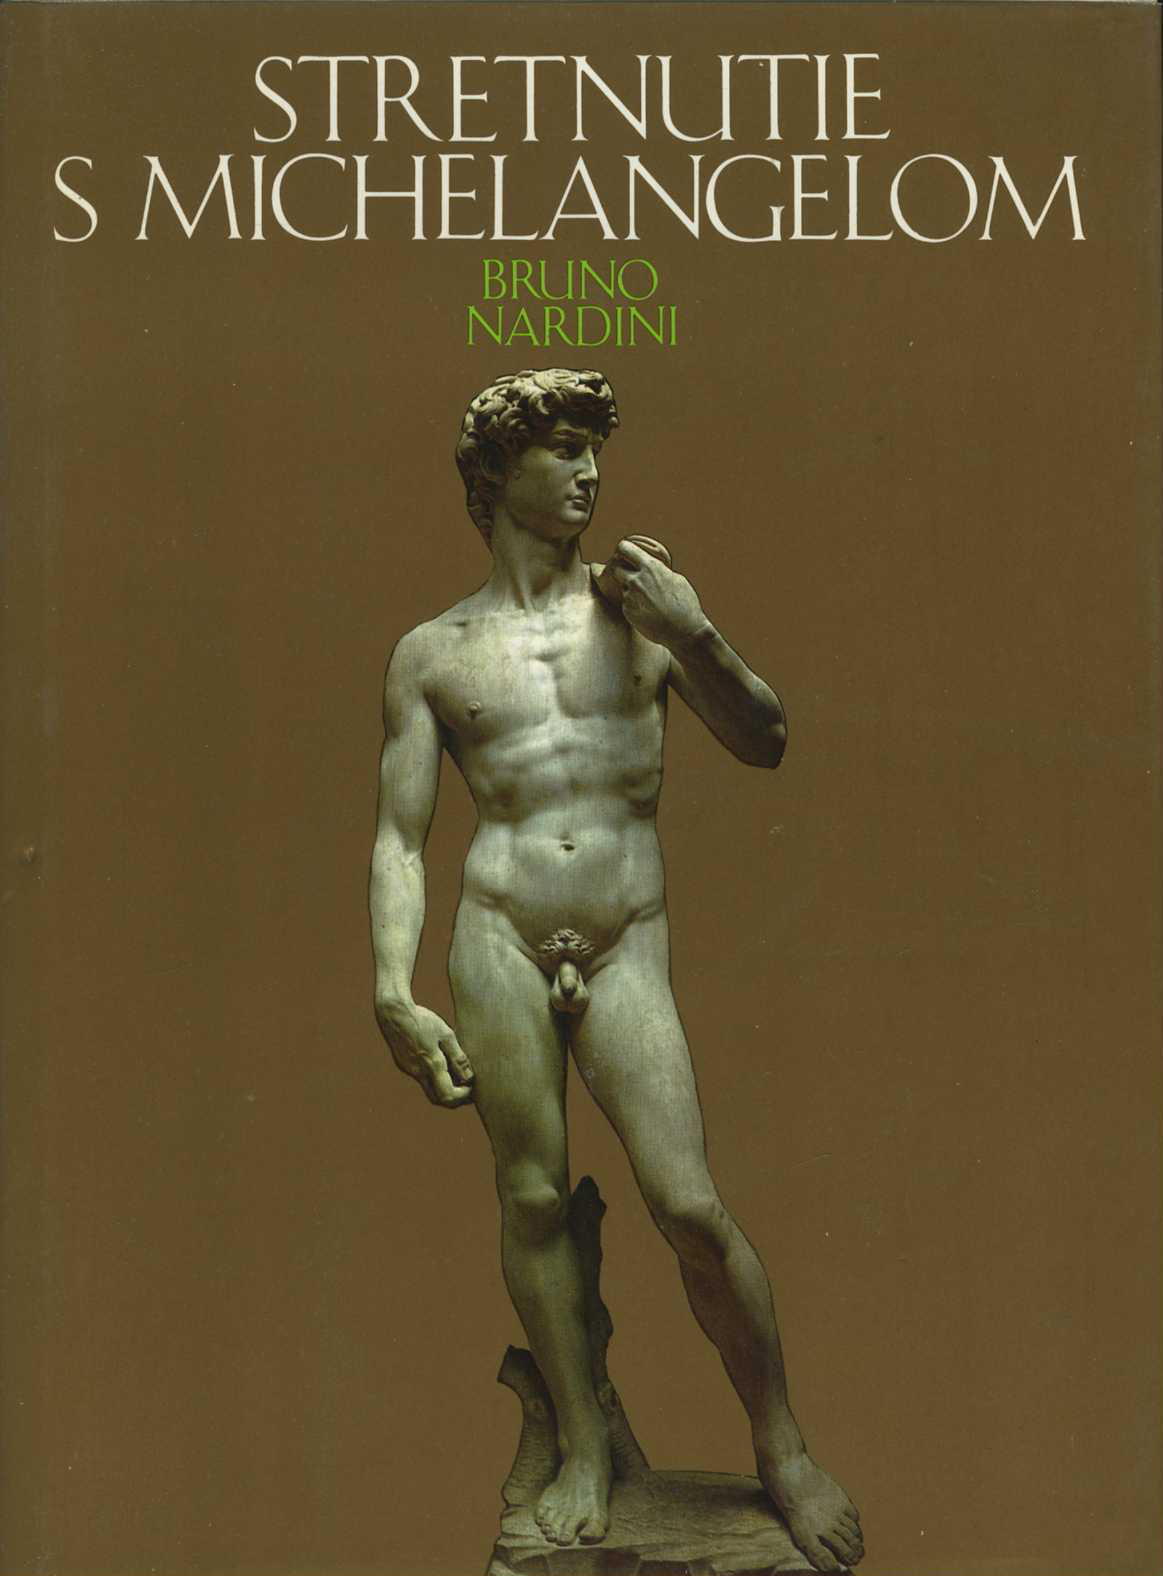 Stretnutie s Michelangelom (Bruno Nardini)